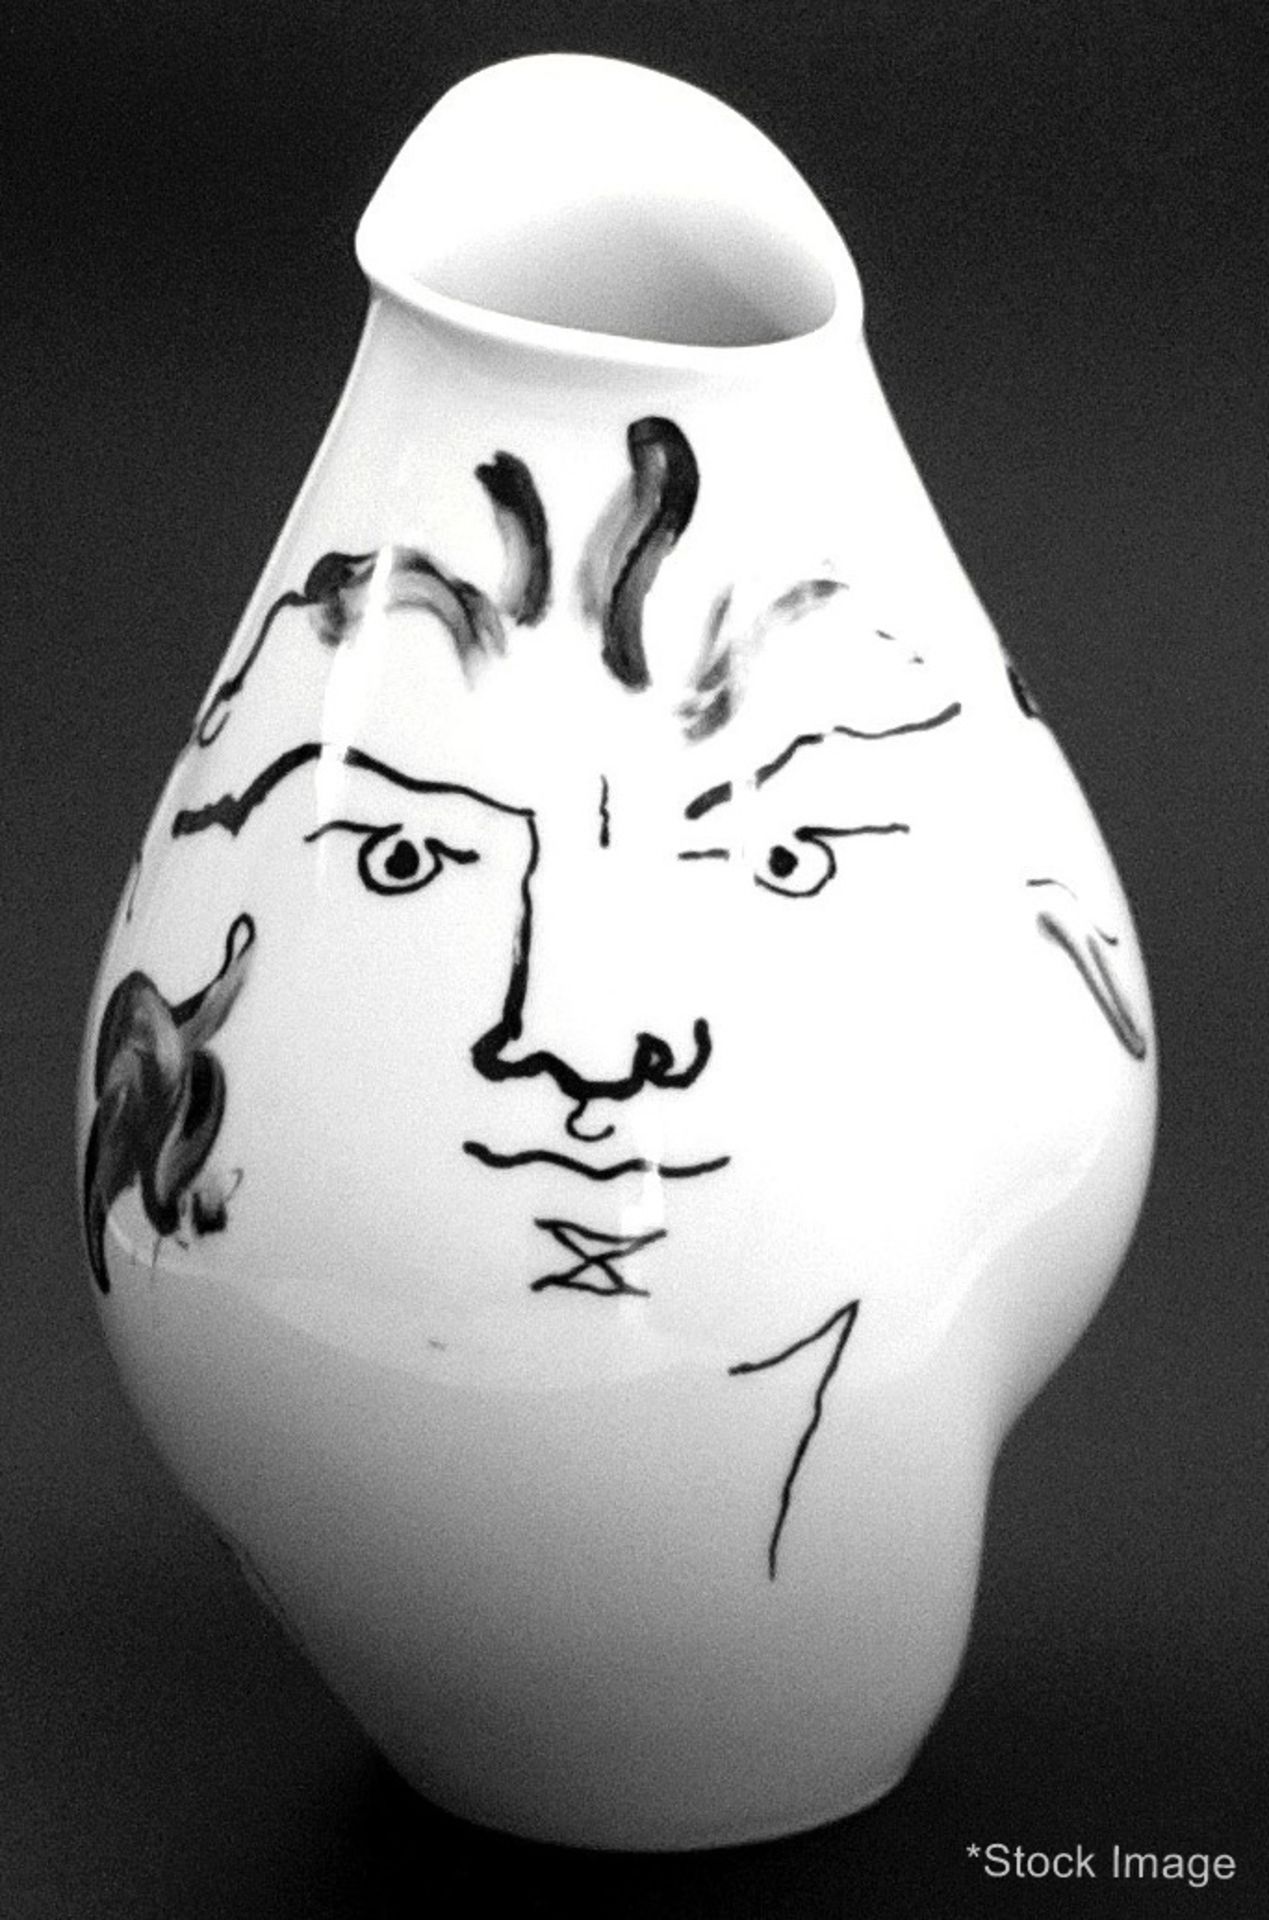 1 x JEAN COCTEAU / ROSENTHAL 'Tetes Face' Sculptural Glazed Porcelain Art Vase, 22cm - Circa 1970 - Image 10 of 10